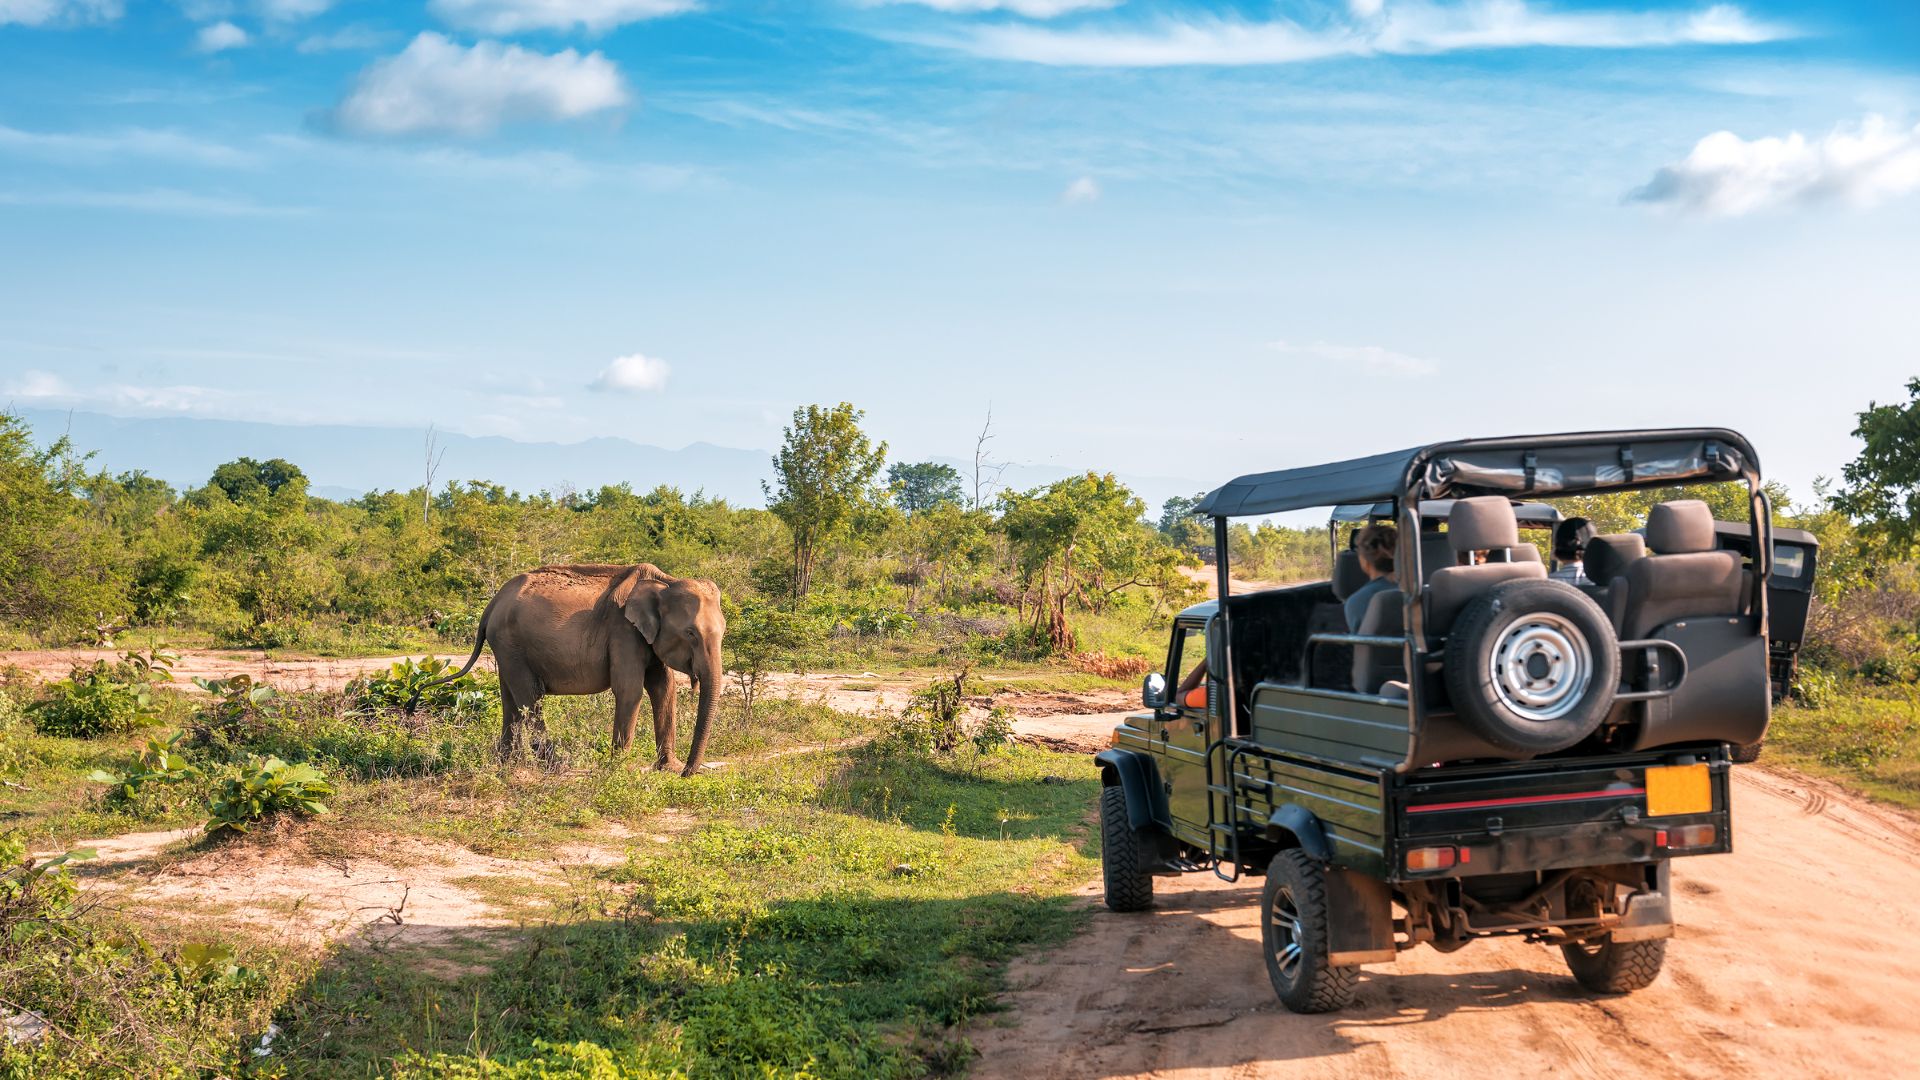 Udawalawe National Park - Sri Lanka